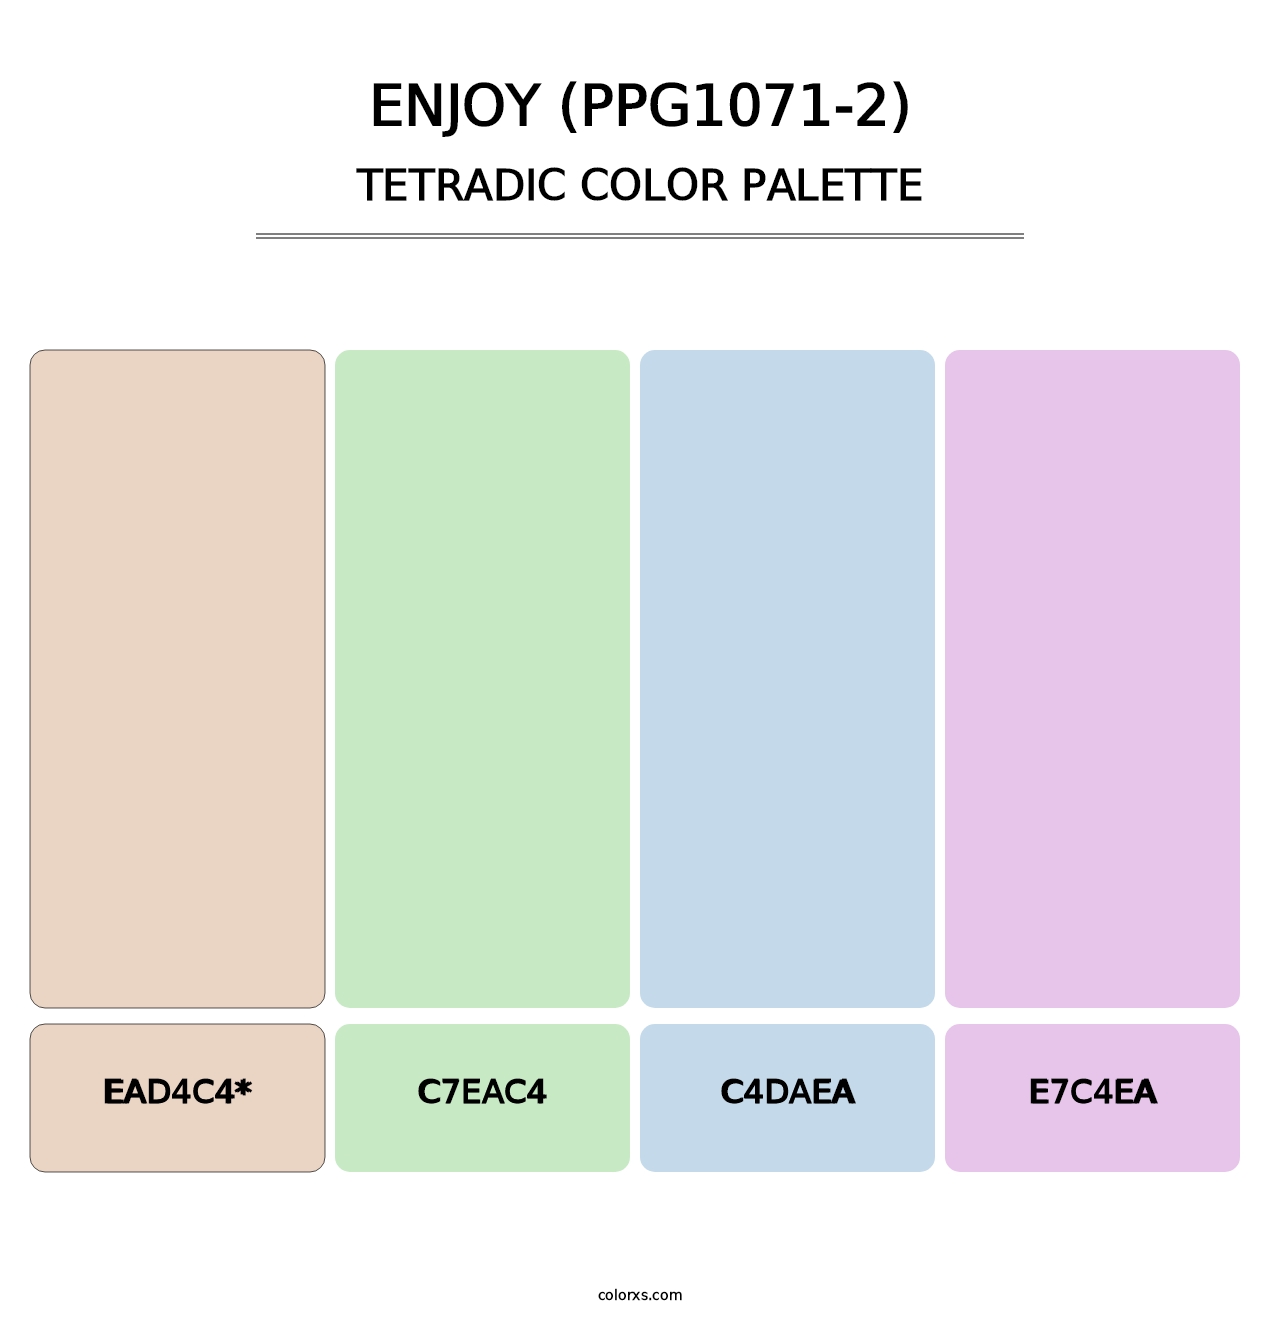 Enjoy (PPG1071-2) - Tetradic Color Palette